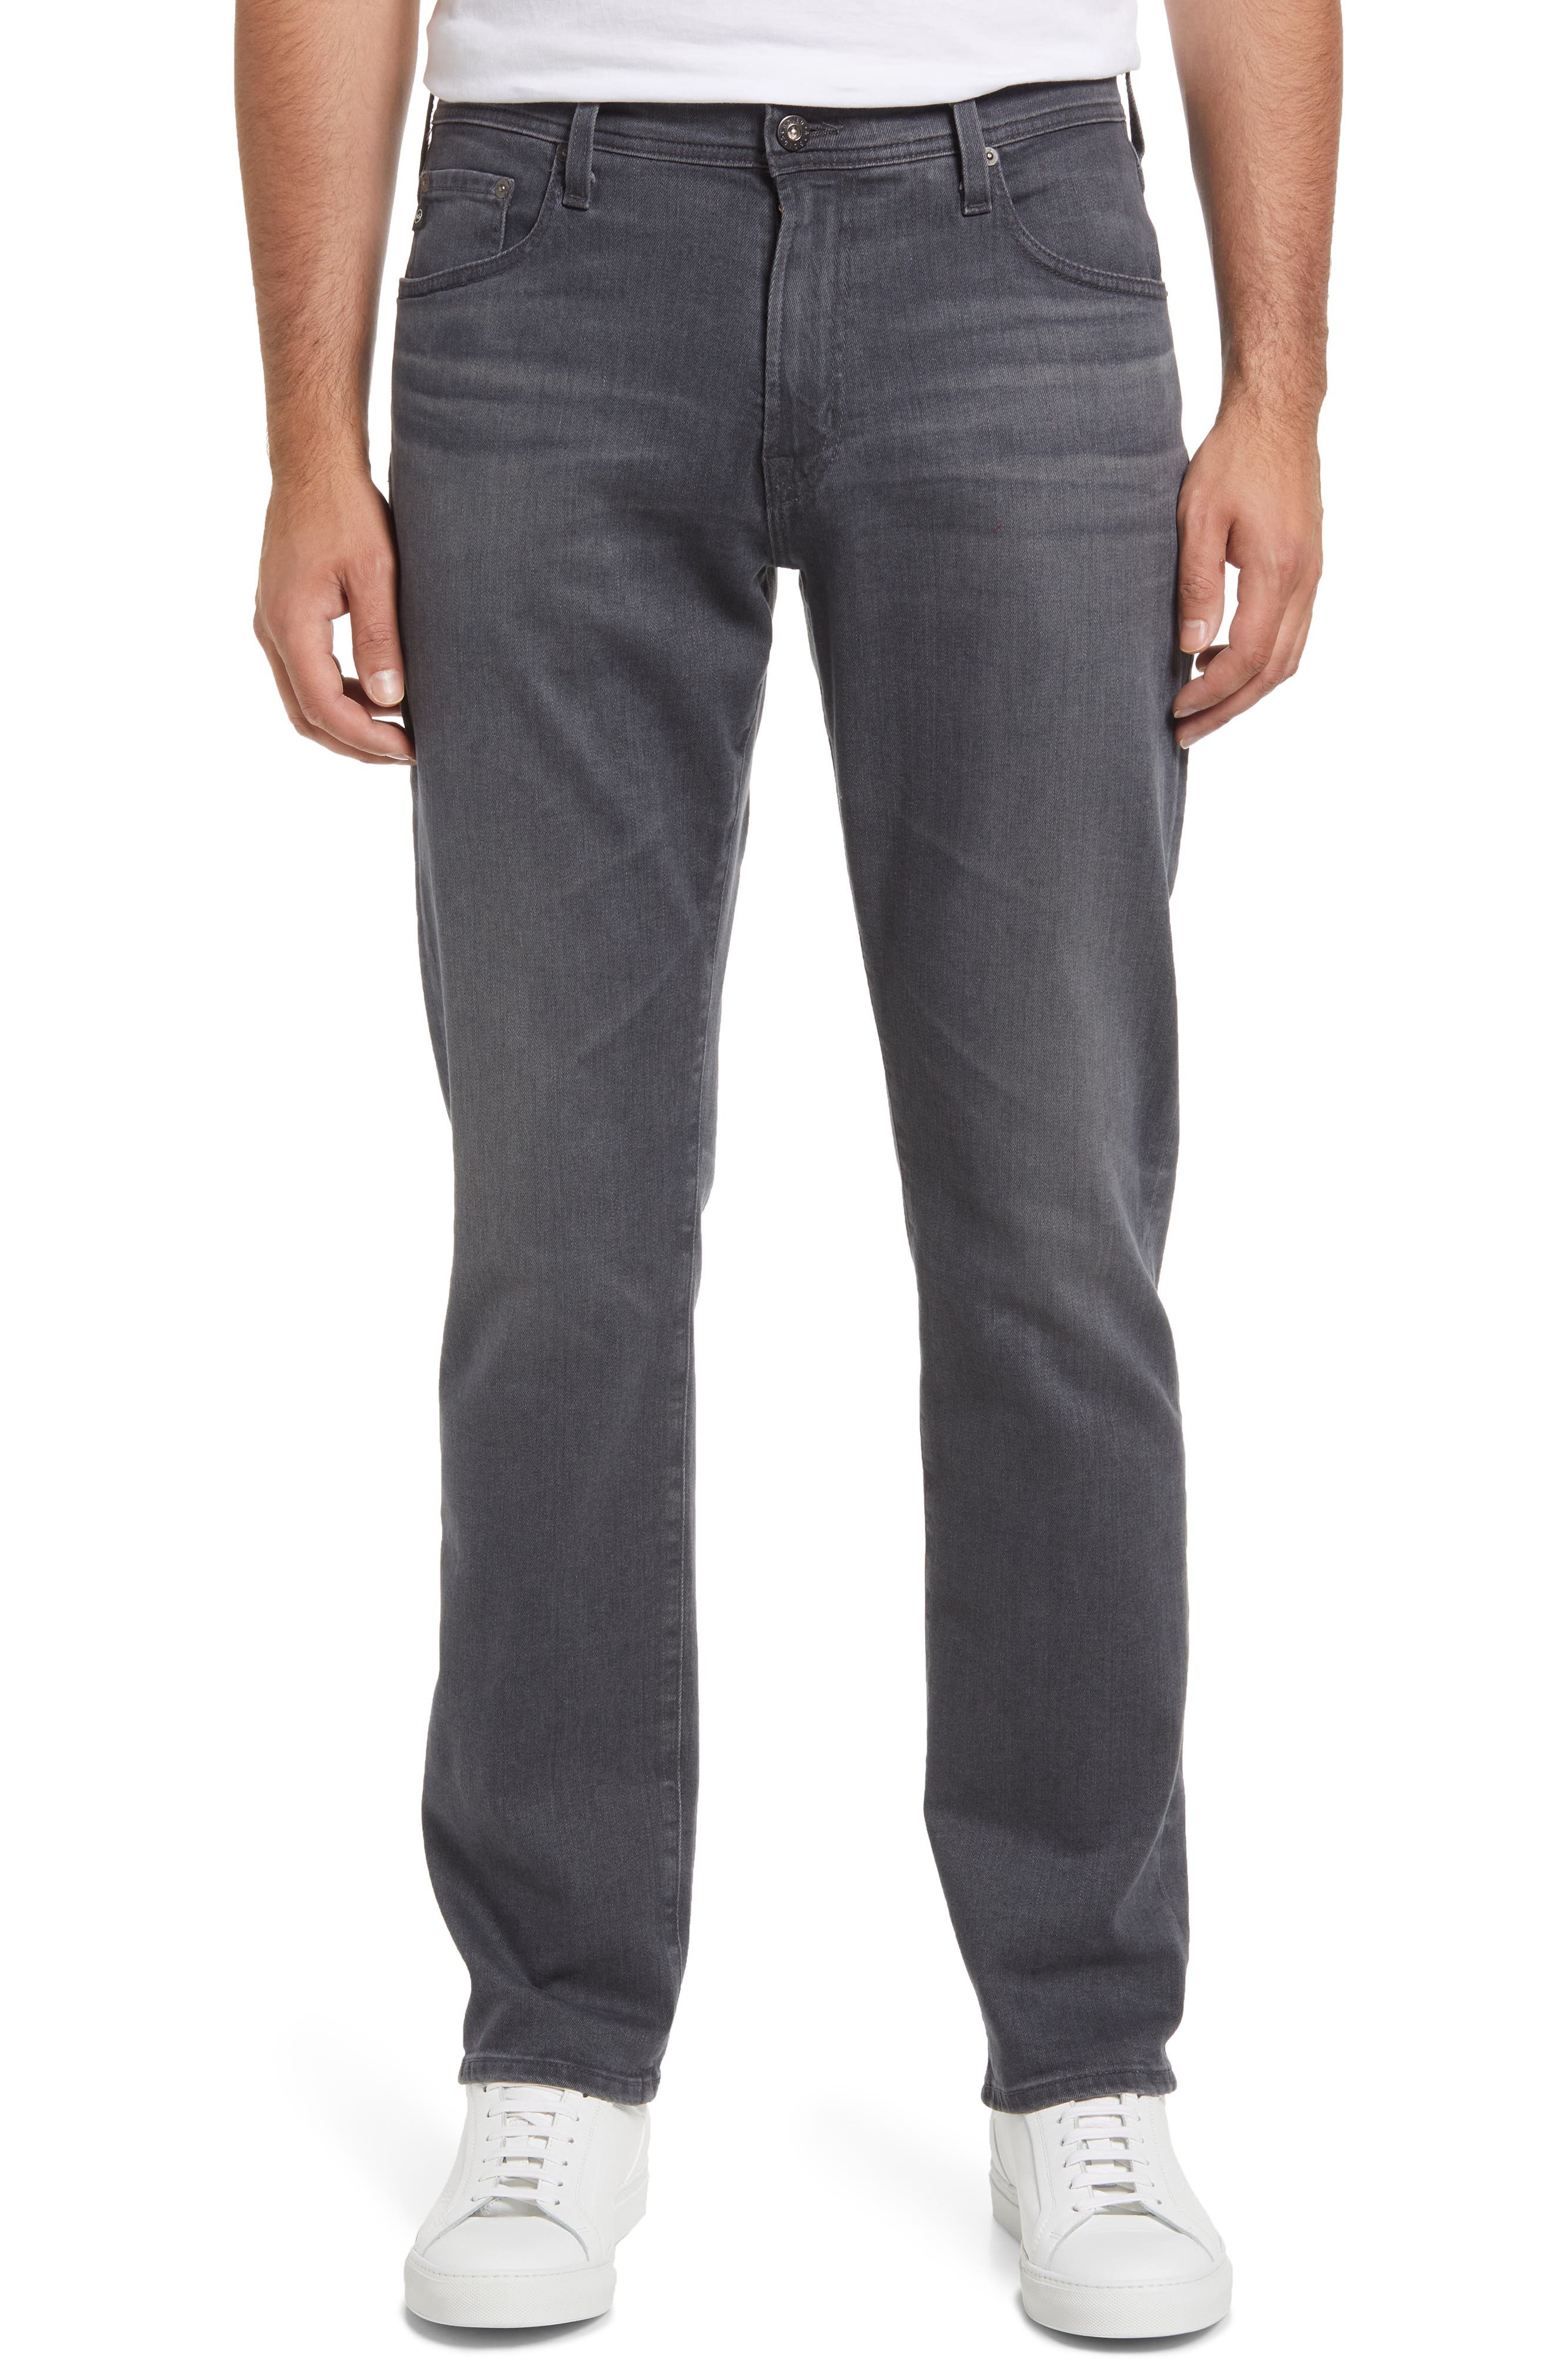 for Men Mens Clothing Jeans Slim jeans Grey ASOS Denim Tapered Jeans in Grey 